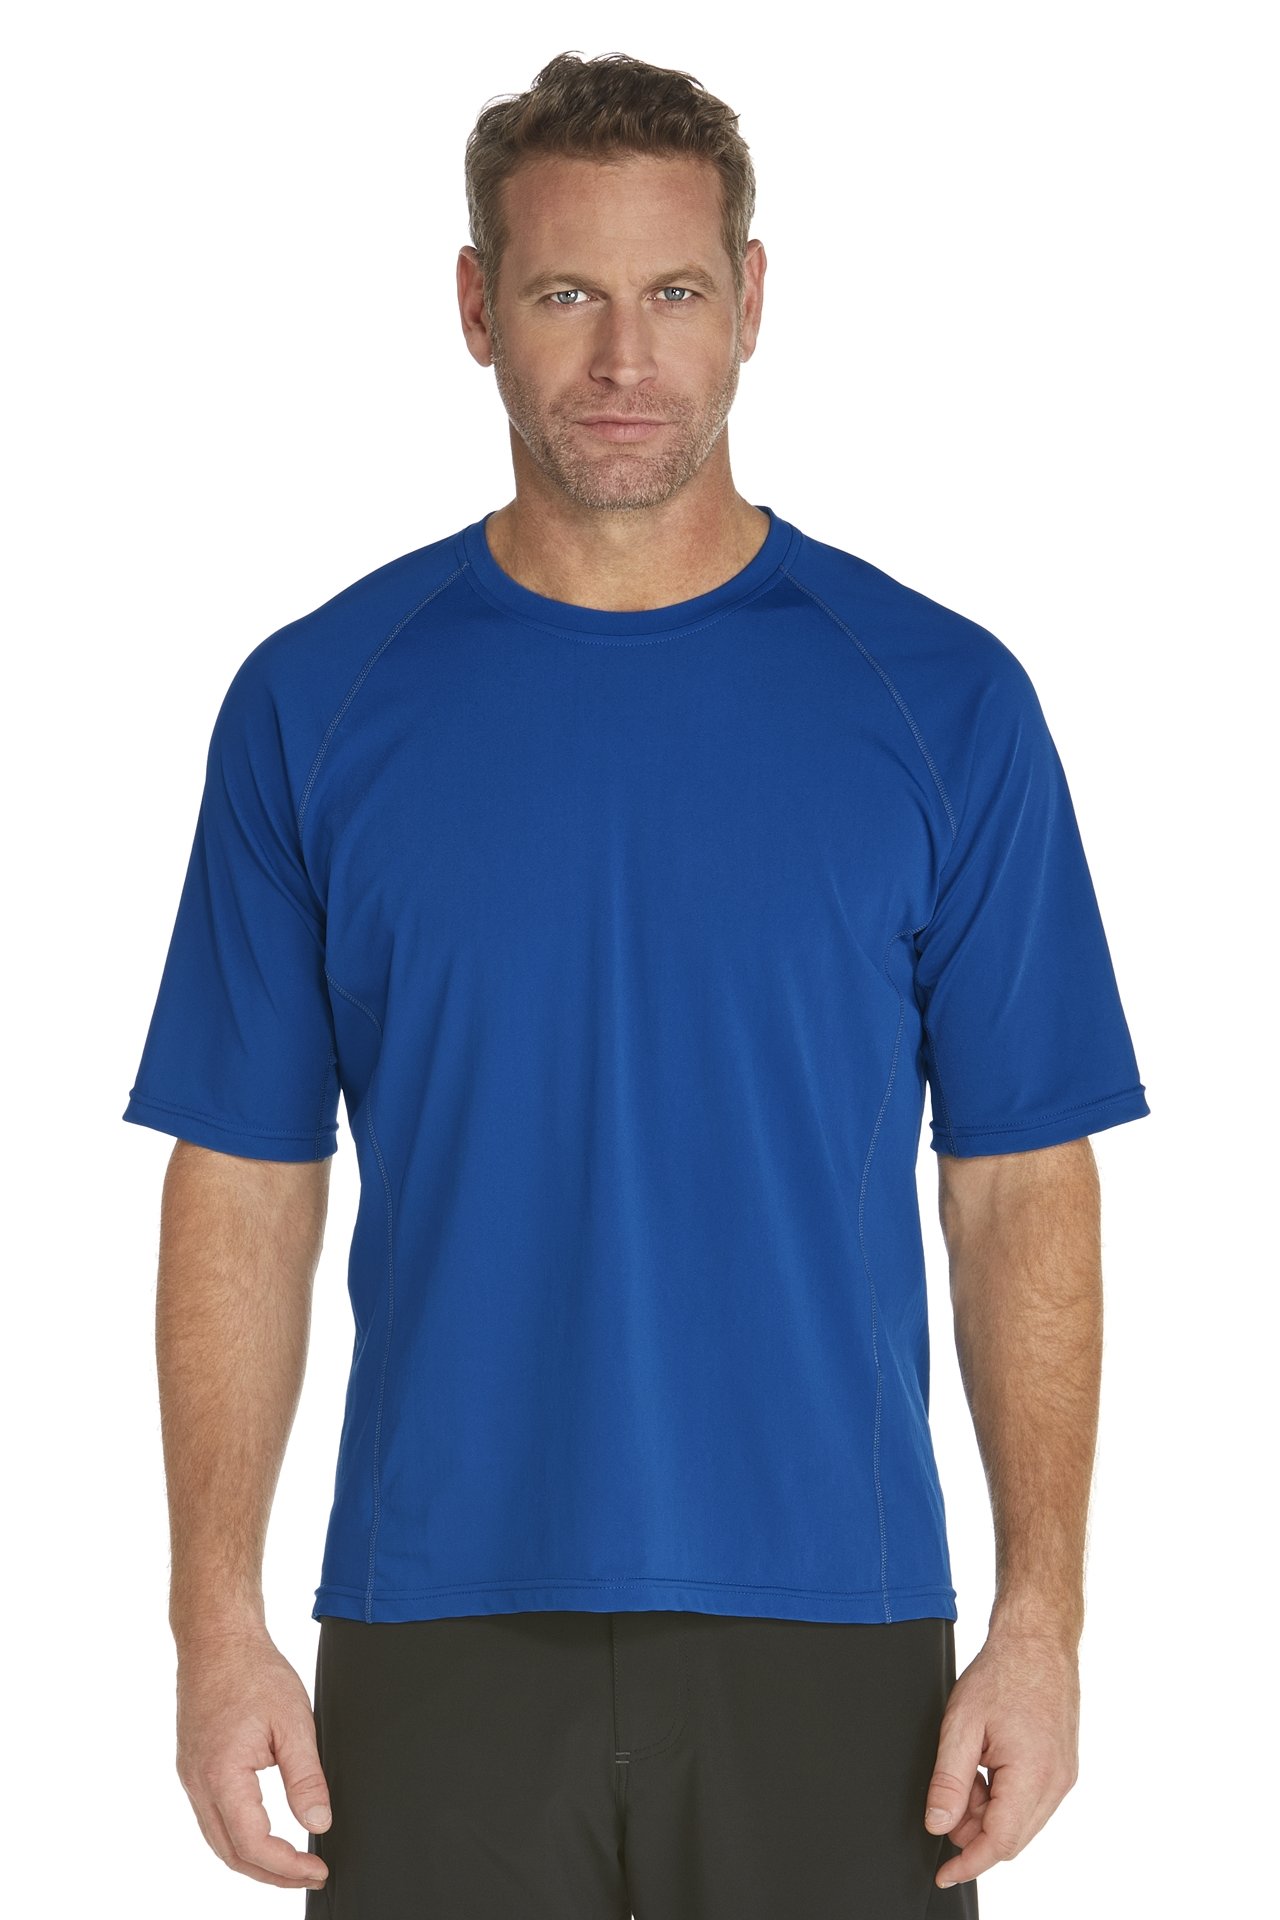 Coolibar - UV Schutz T-Shirt Herren - blau